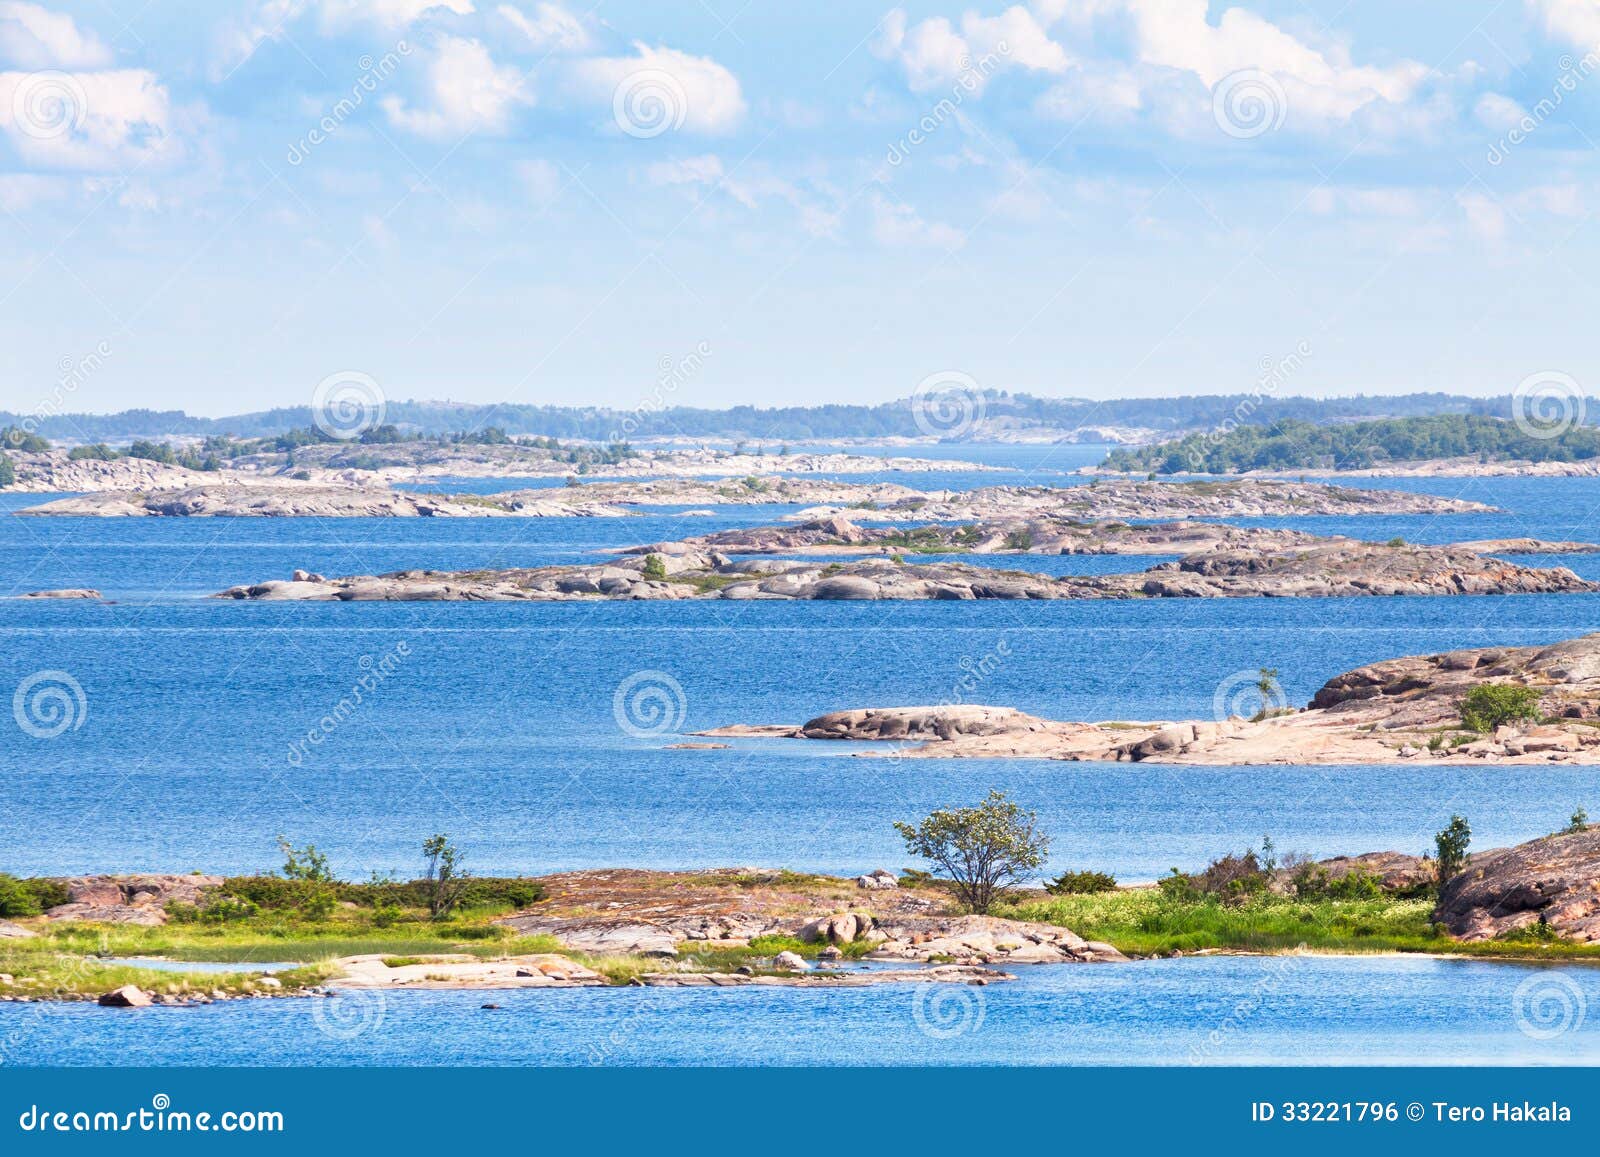 finnish archipelago with bright blue water